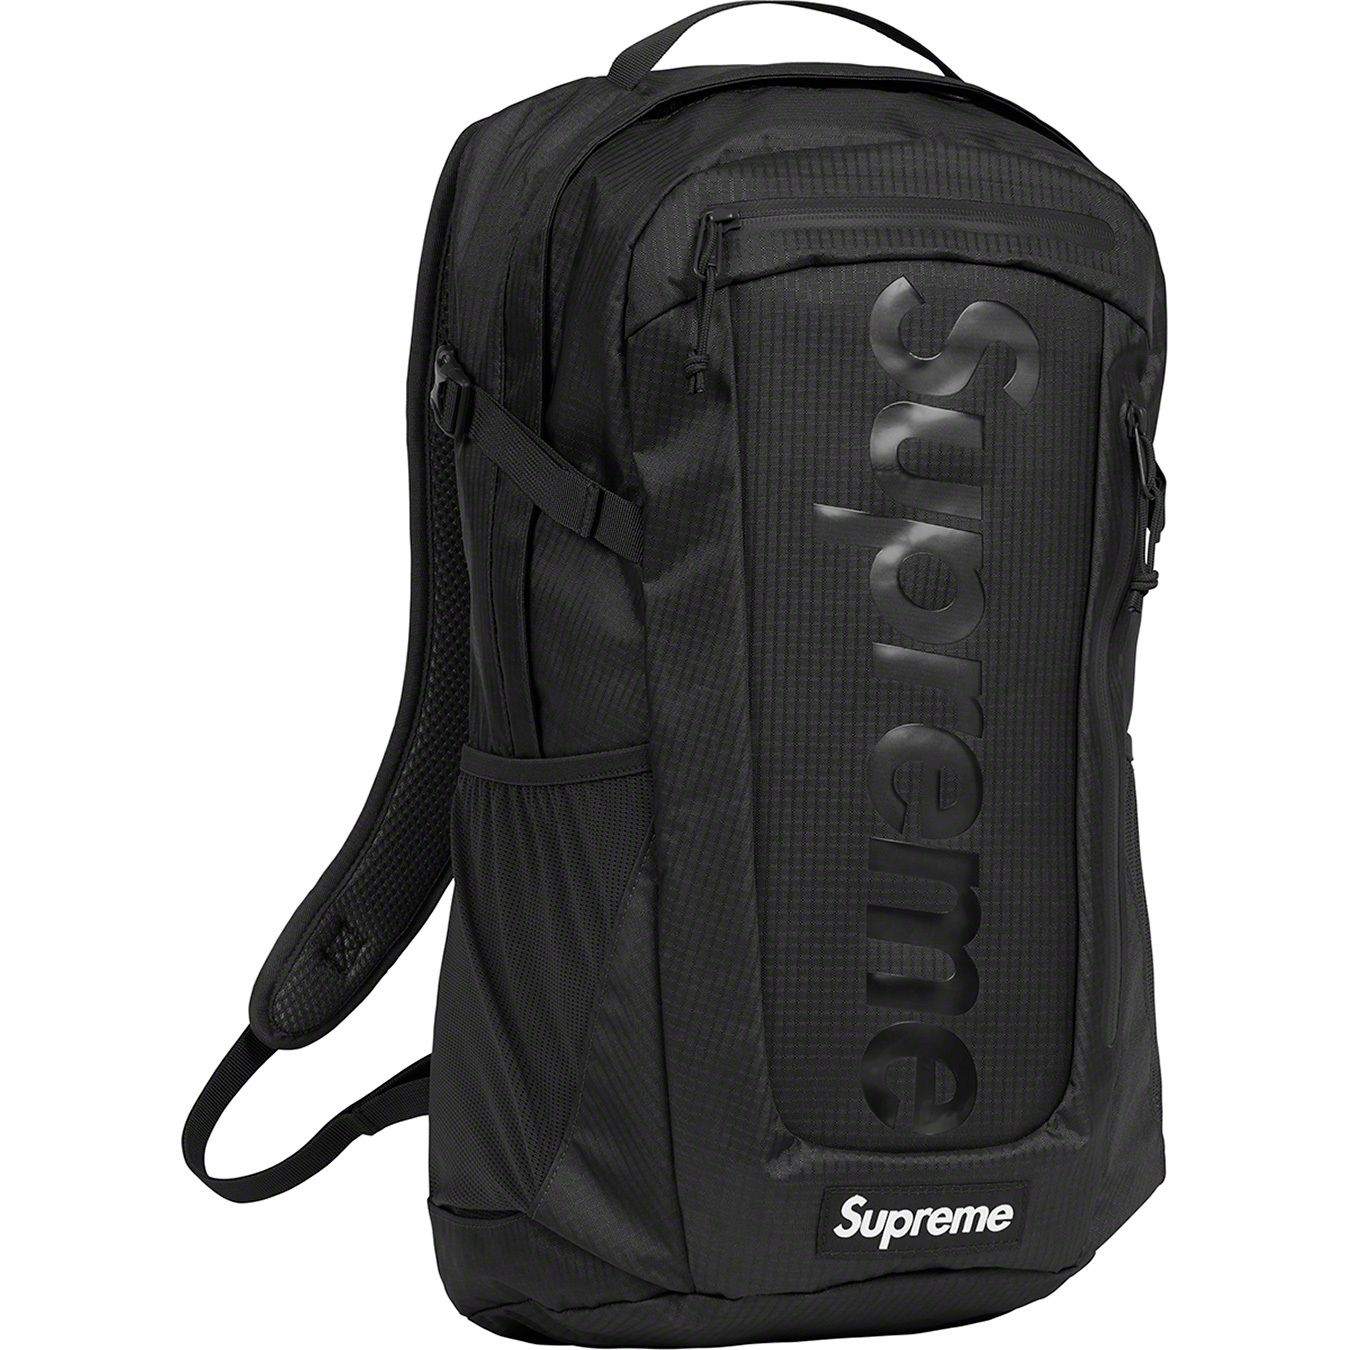 Supreme Backpack 2021